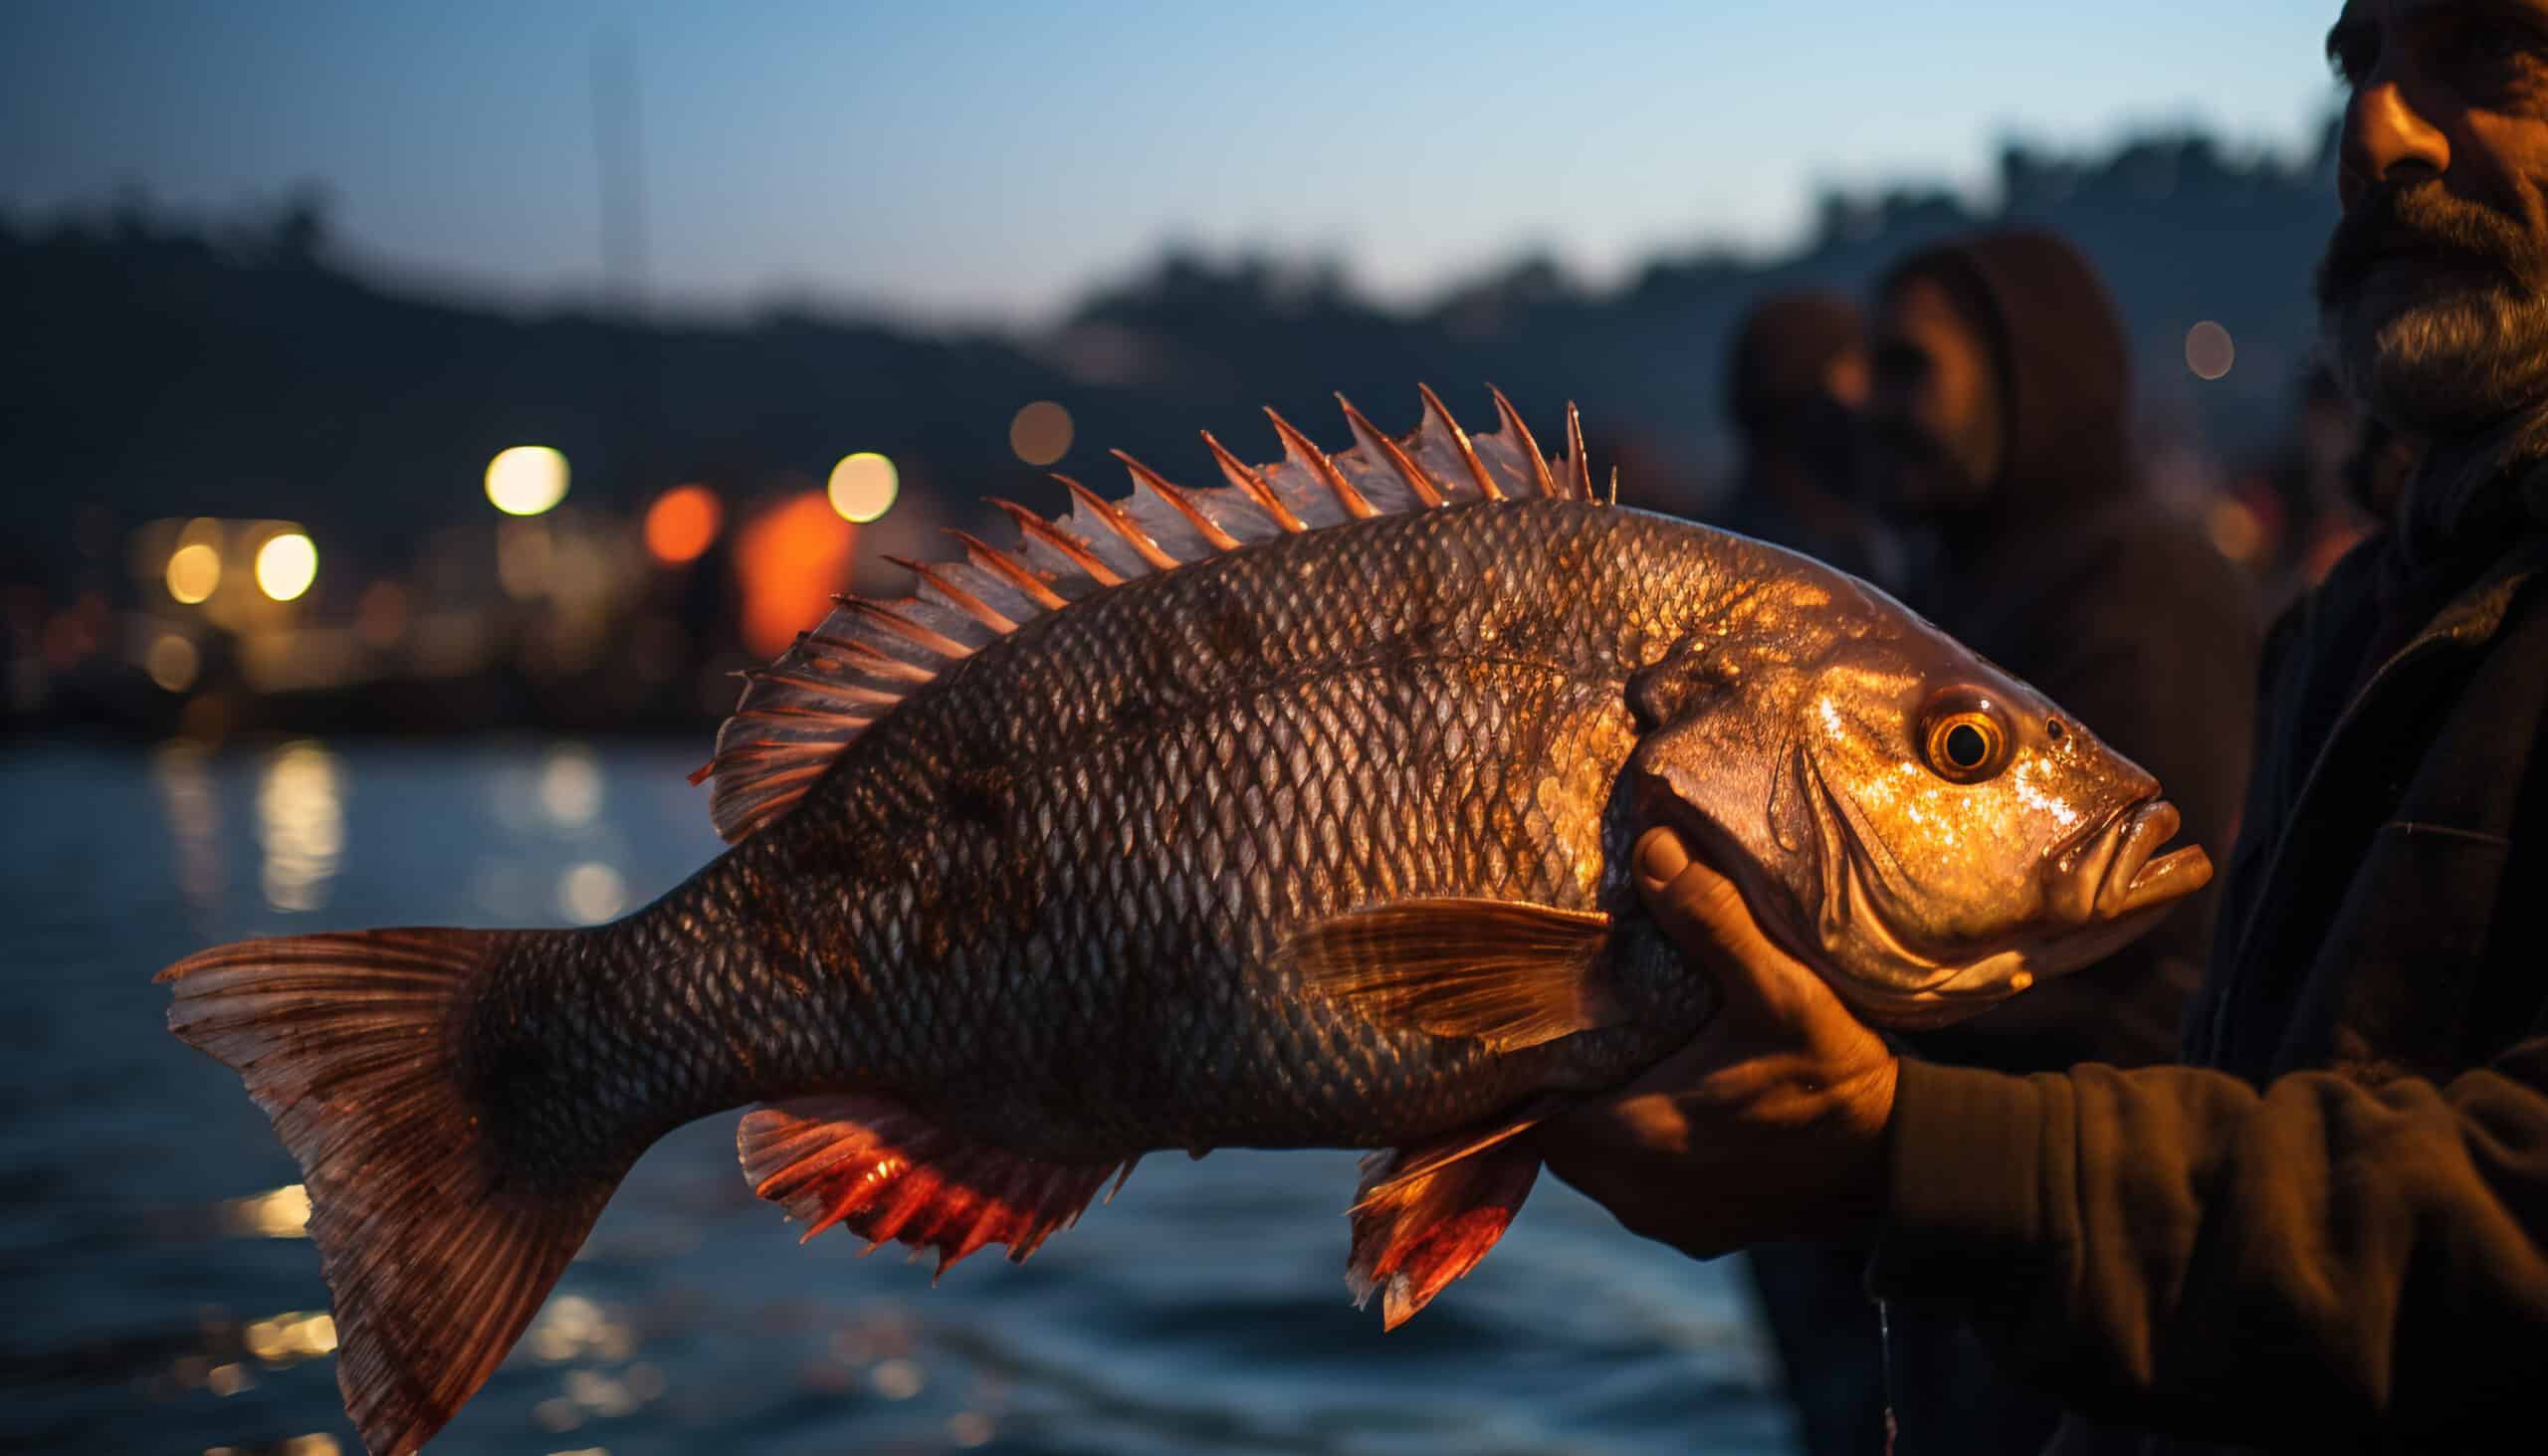 fanatic4fishing.com : Is it hard to catch fish at night?